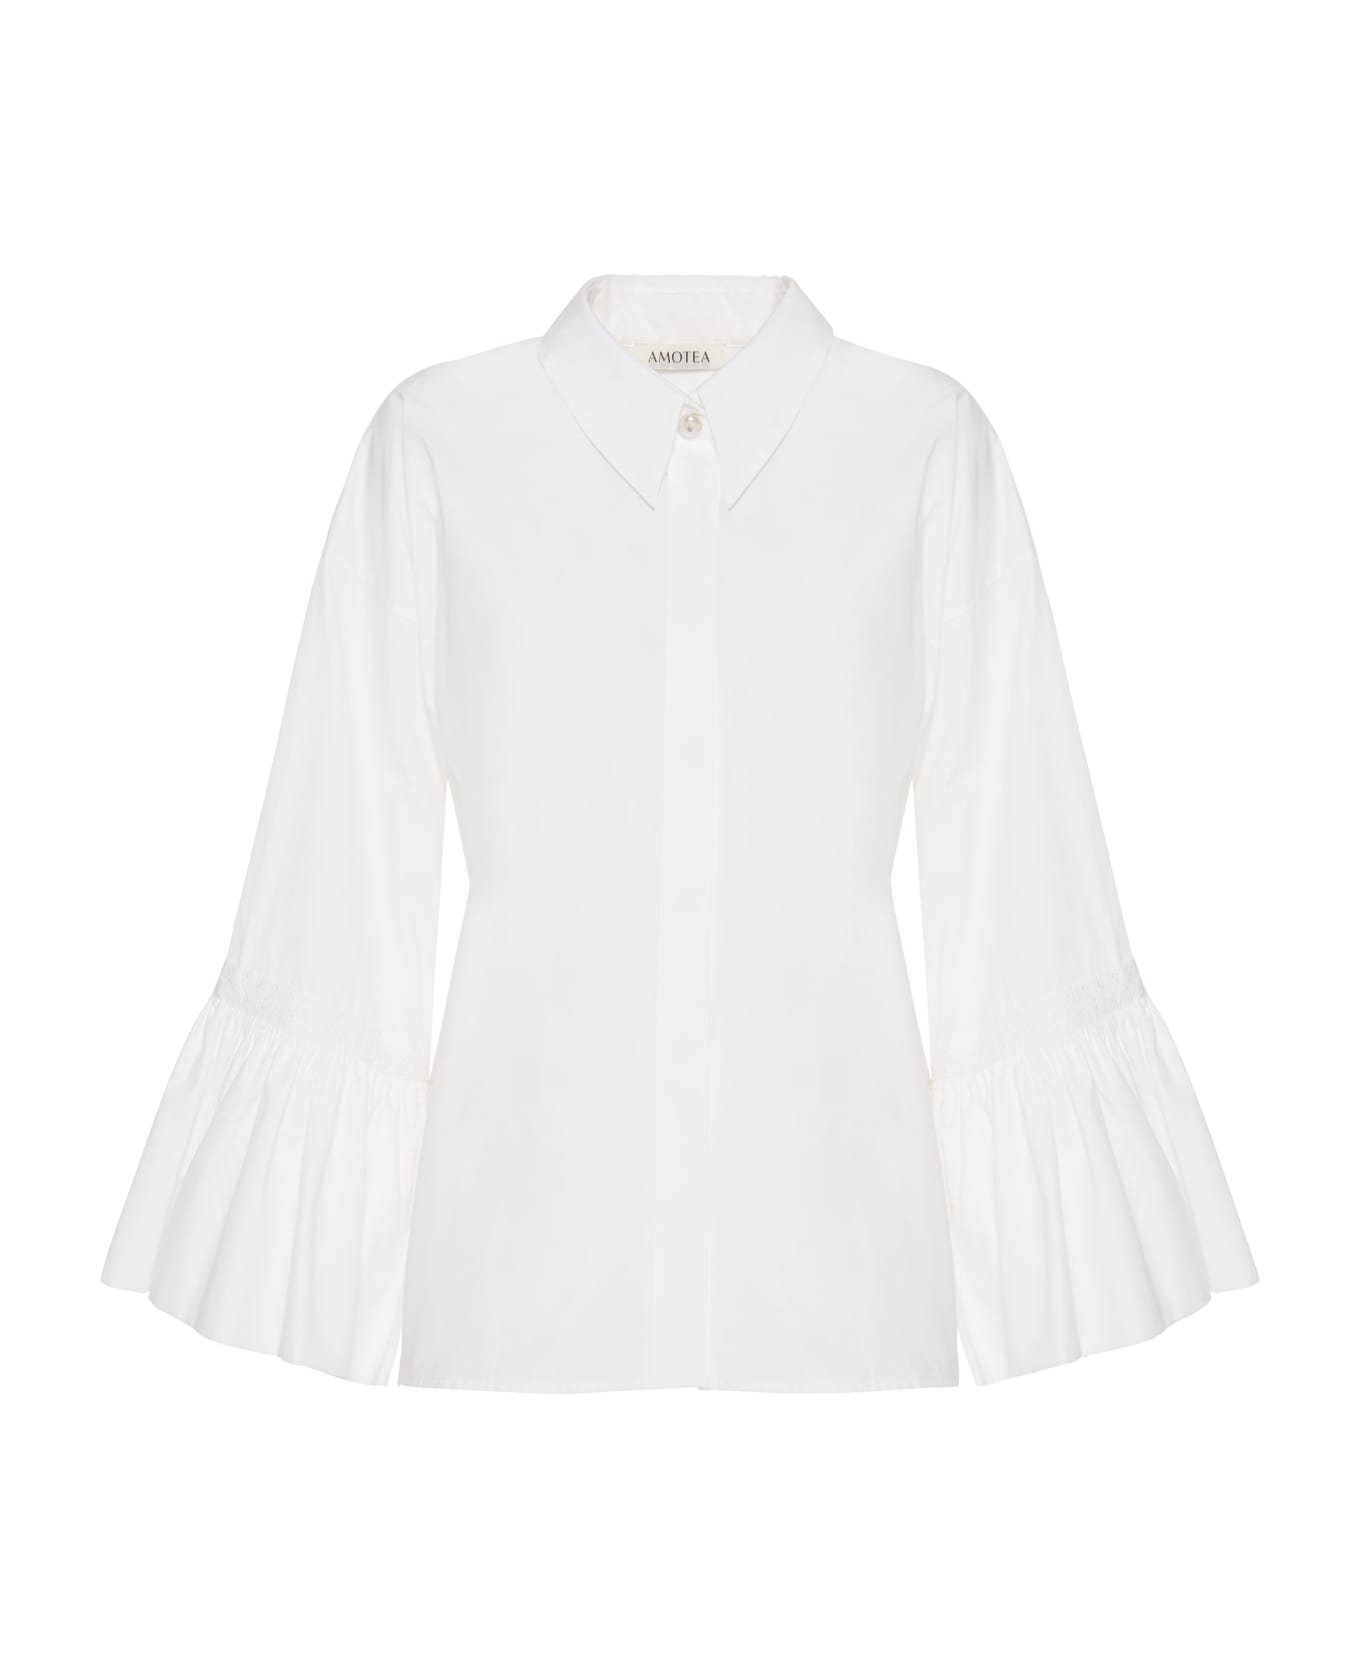 Amotea Claudia Shirt In White Poplin - White